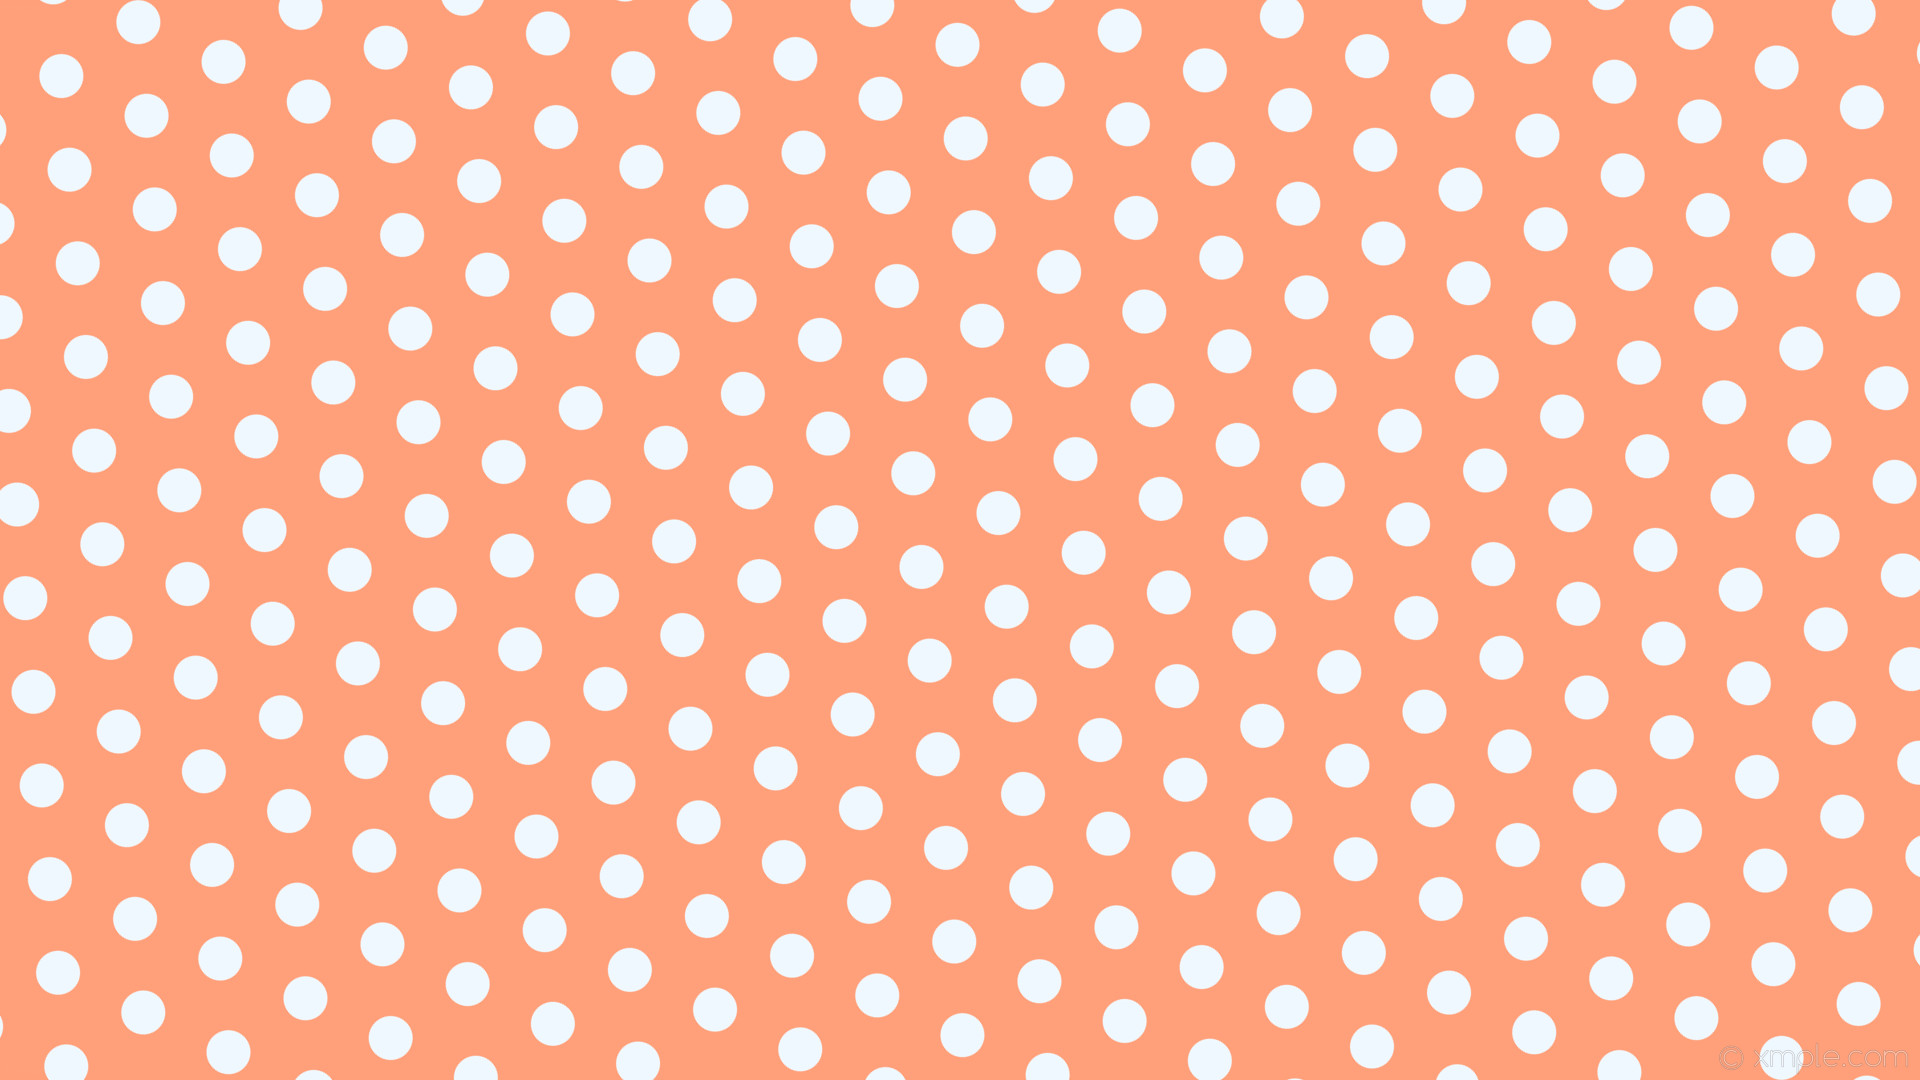 1920x1080 wallpaper hexagon white polka dots red light salmon alice blue #ffa07a  #f0f8ff diagonal 35